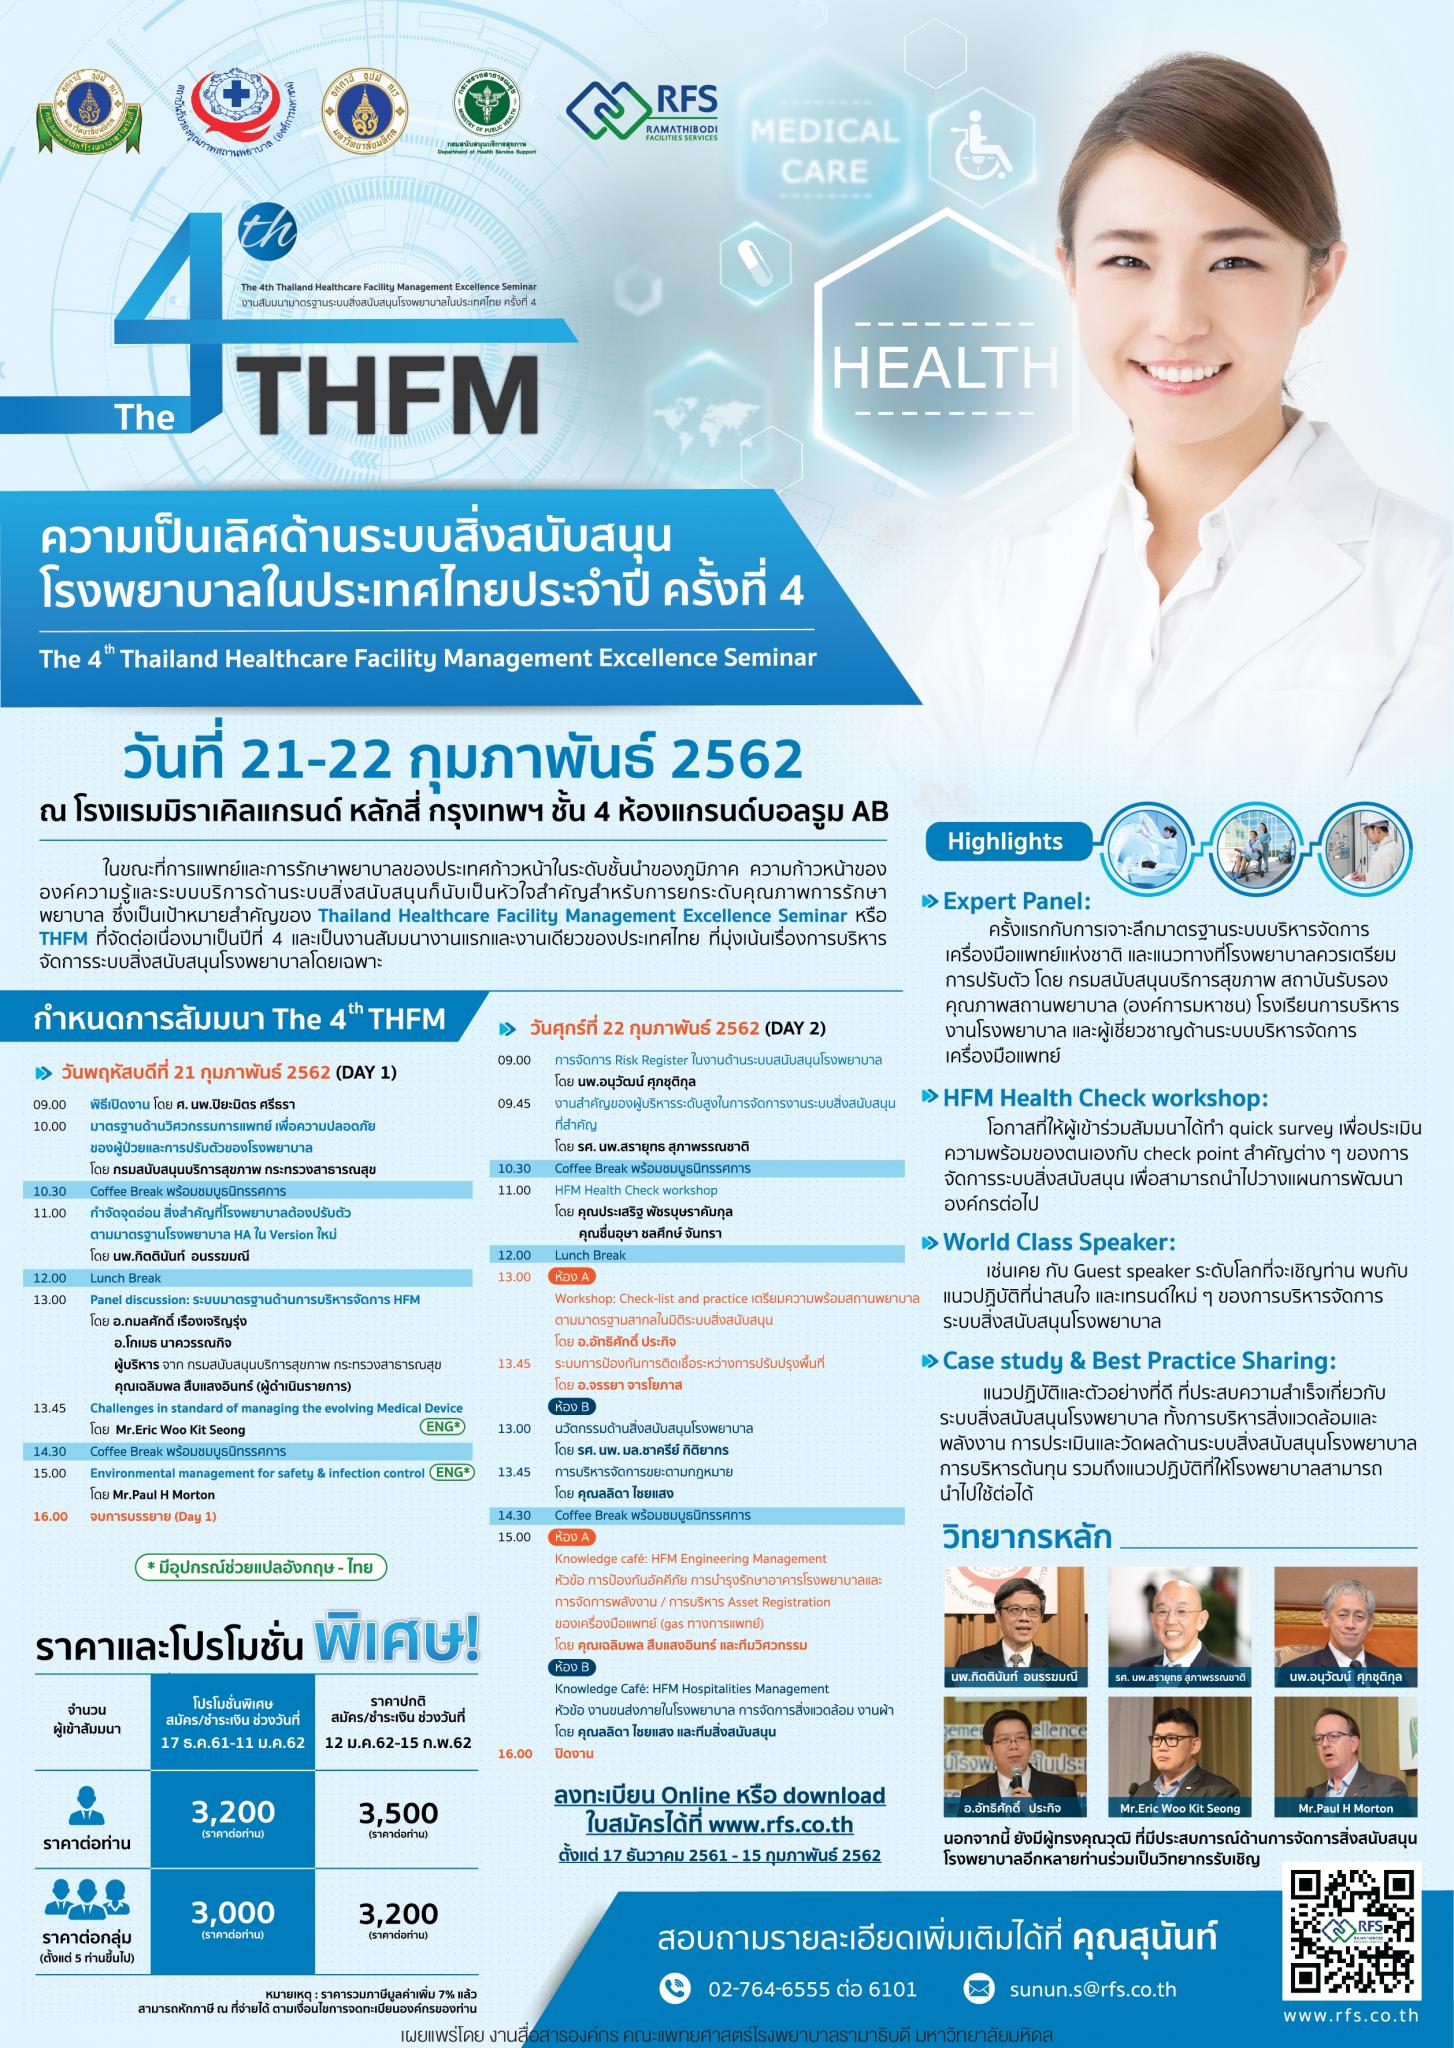 The 4th THFM ความเป็นเลิศด้านระบบสิ่งสนับสนุนโรงพยาบาลในประเทศไทยประจำปี ครั้งที่ 4